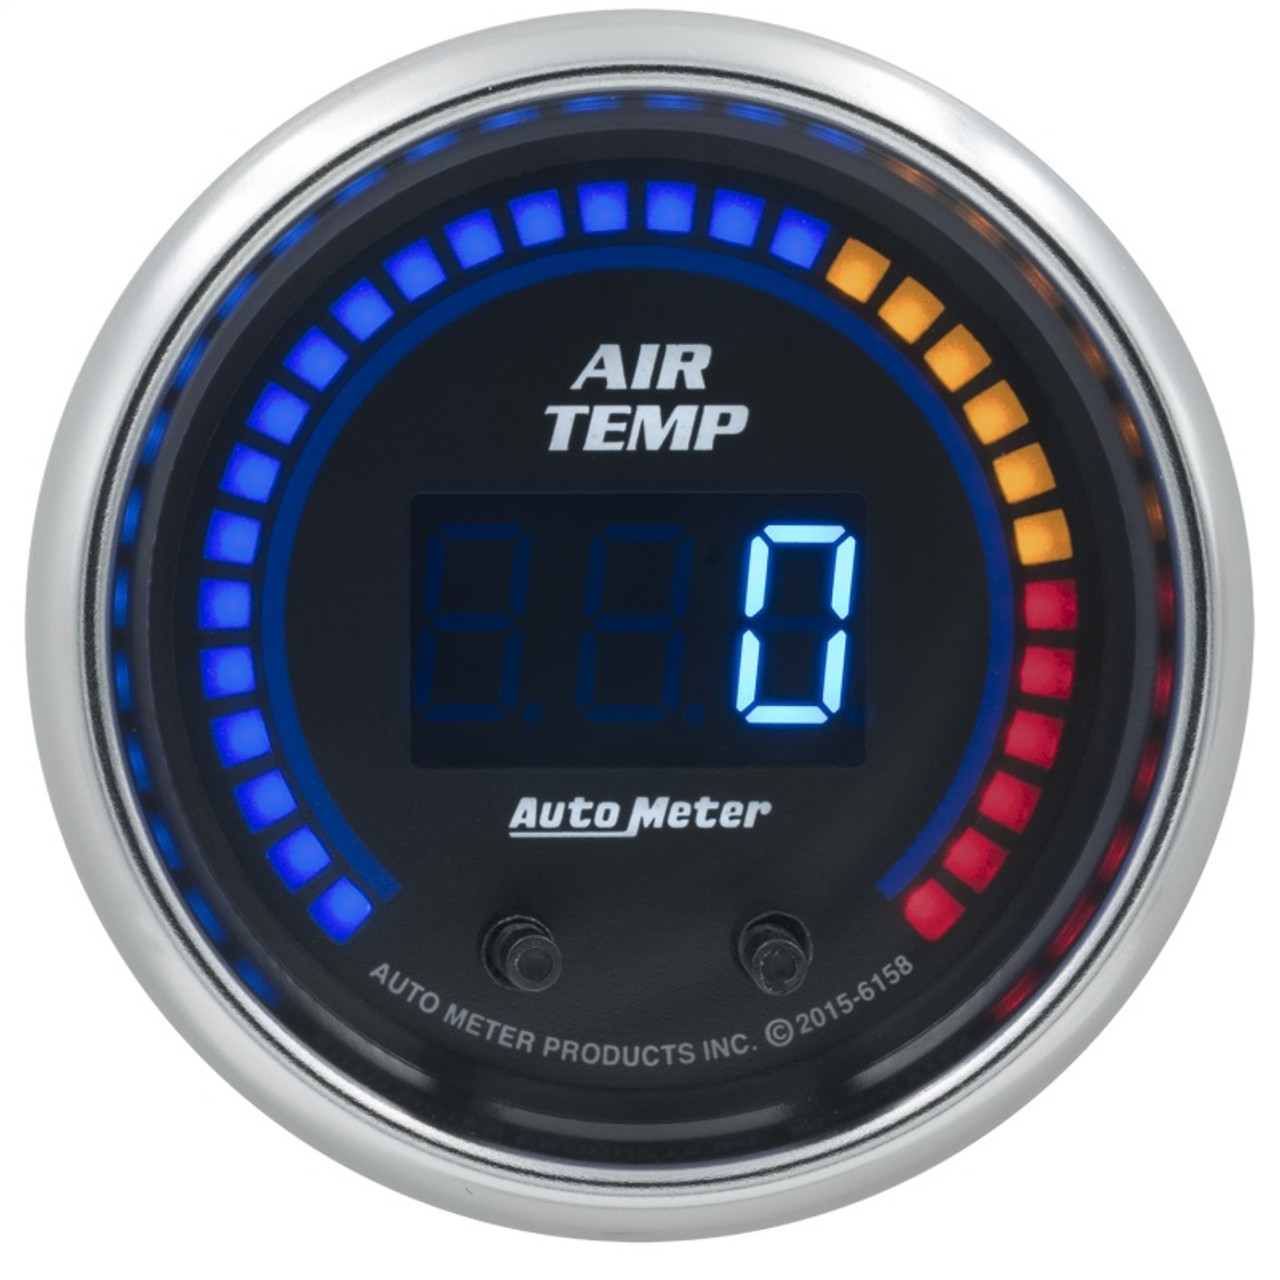 Autometer 6337 Sport-Comp Digital Water Temperature Gauge